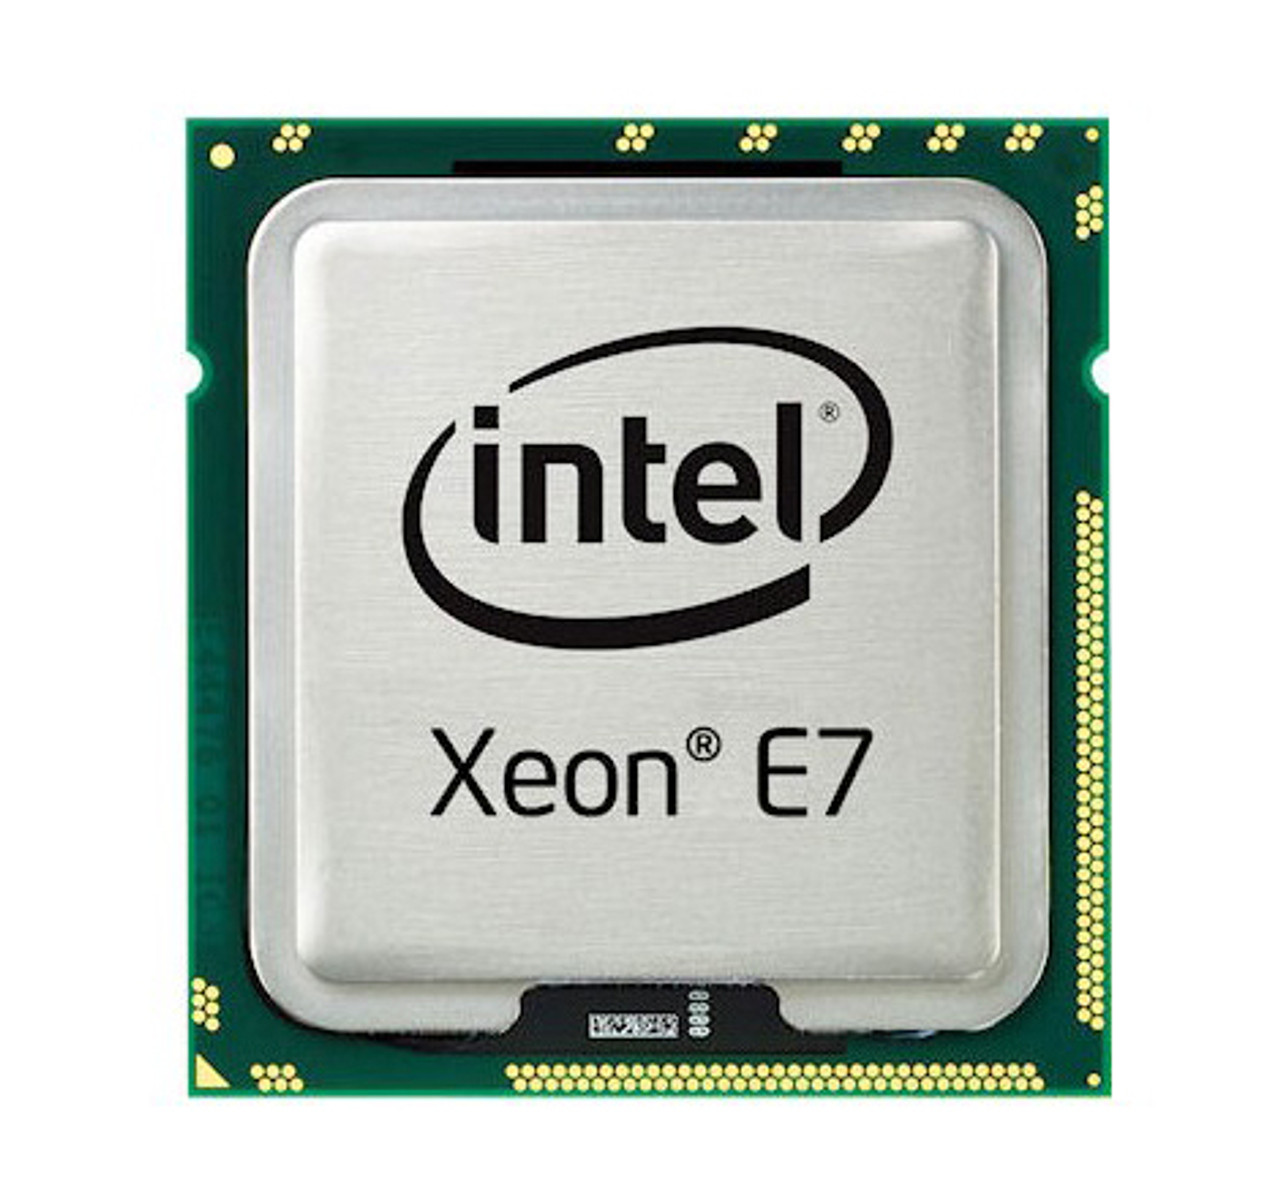 SLG9N - Intel Xeon E7458 6 Core 2.4GHz 9MB L2 Cache 16MB L3 Cache 1066MHz FSB Socket 604 MICRO-PGA 45NM 90W Processor